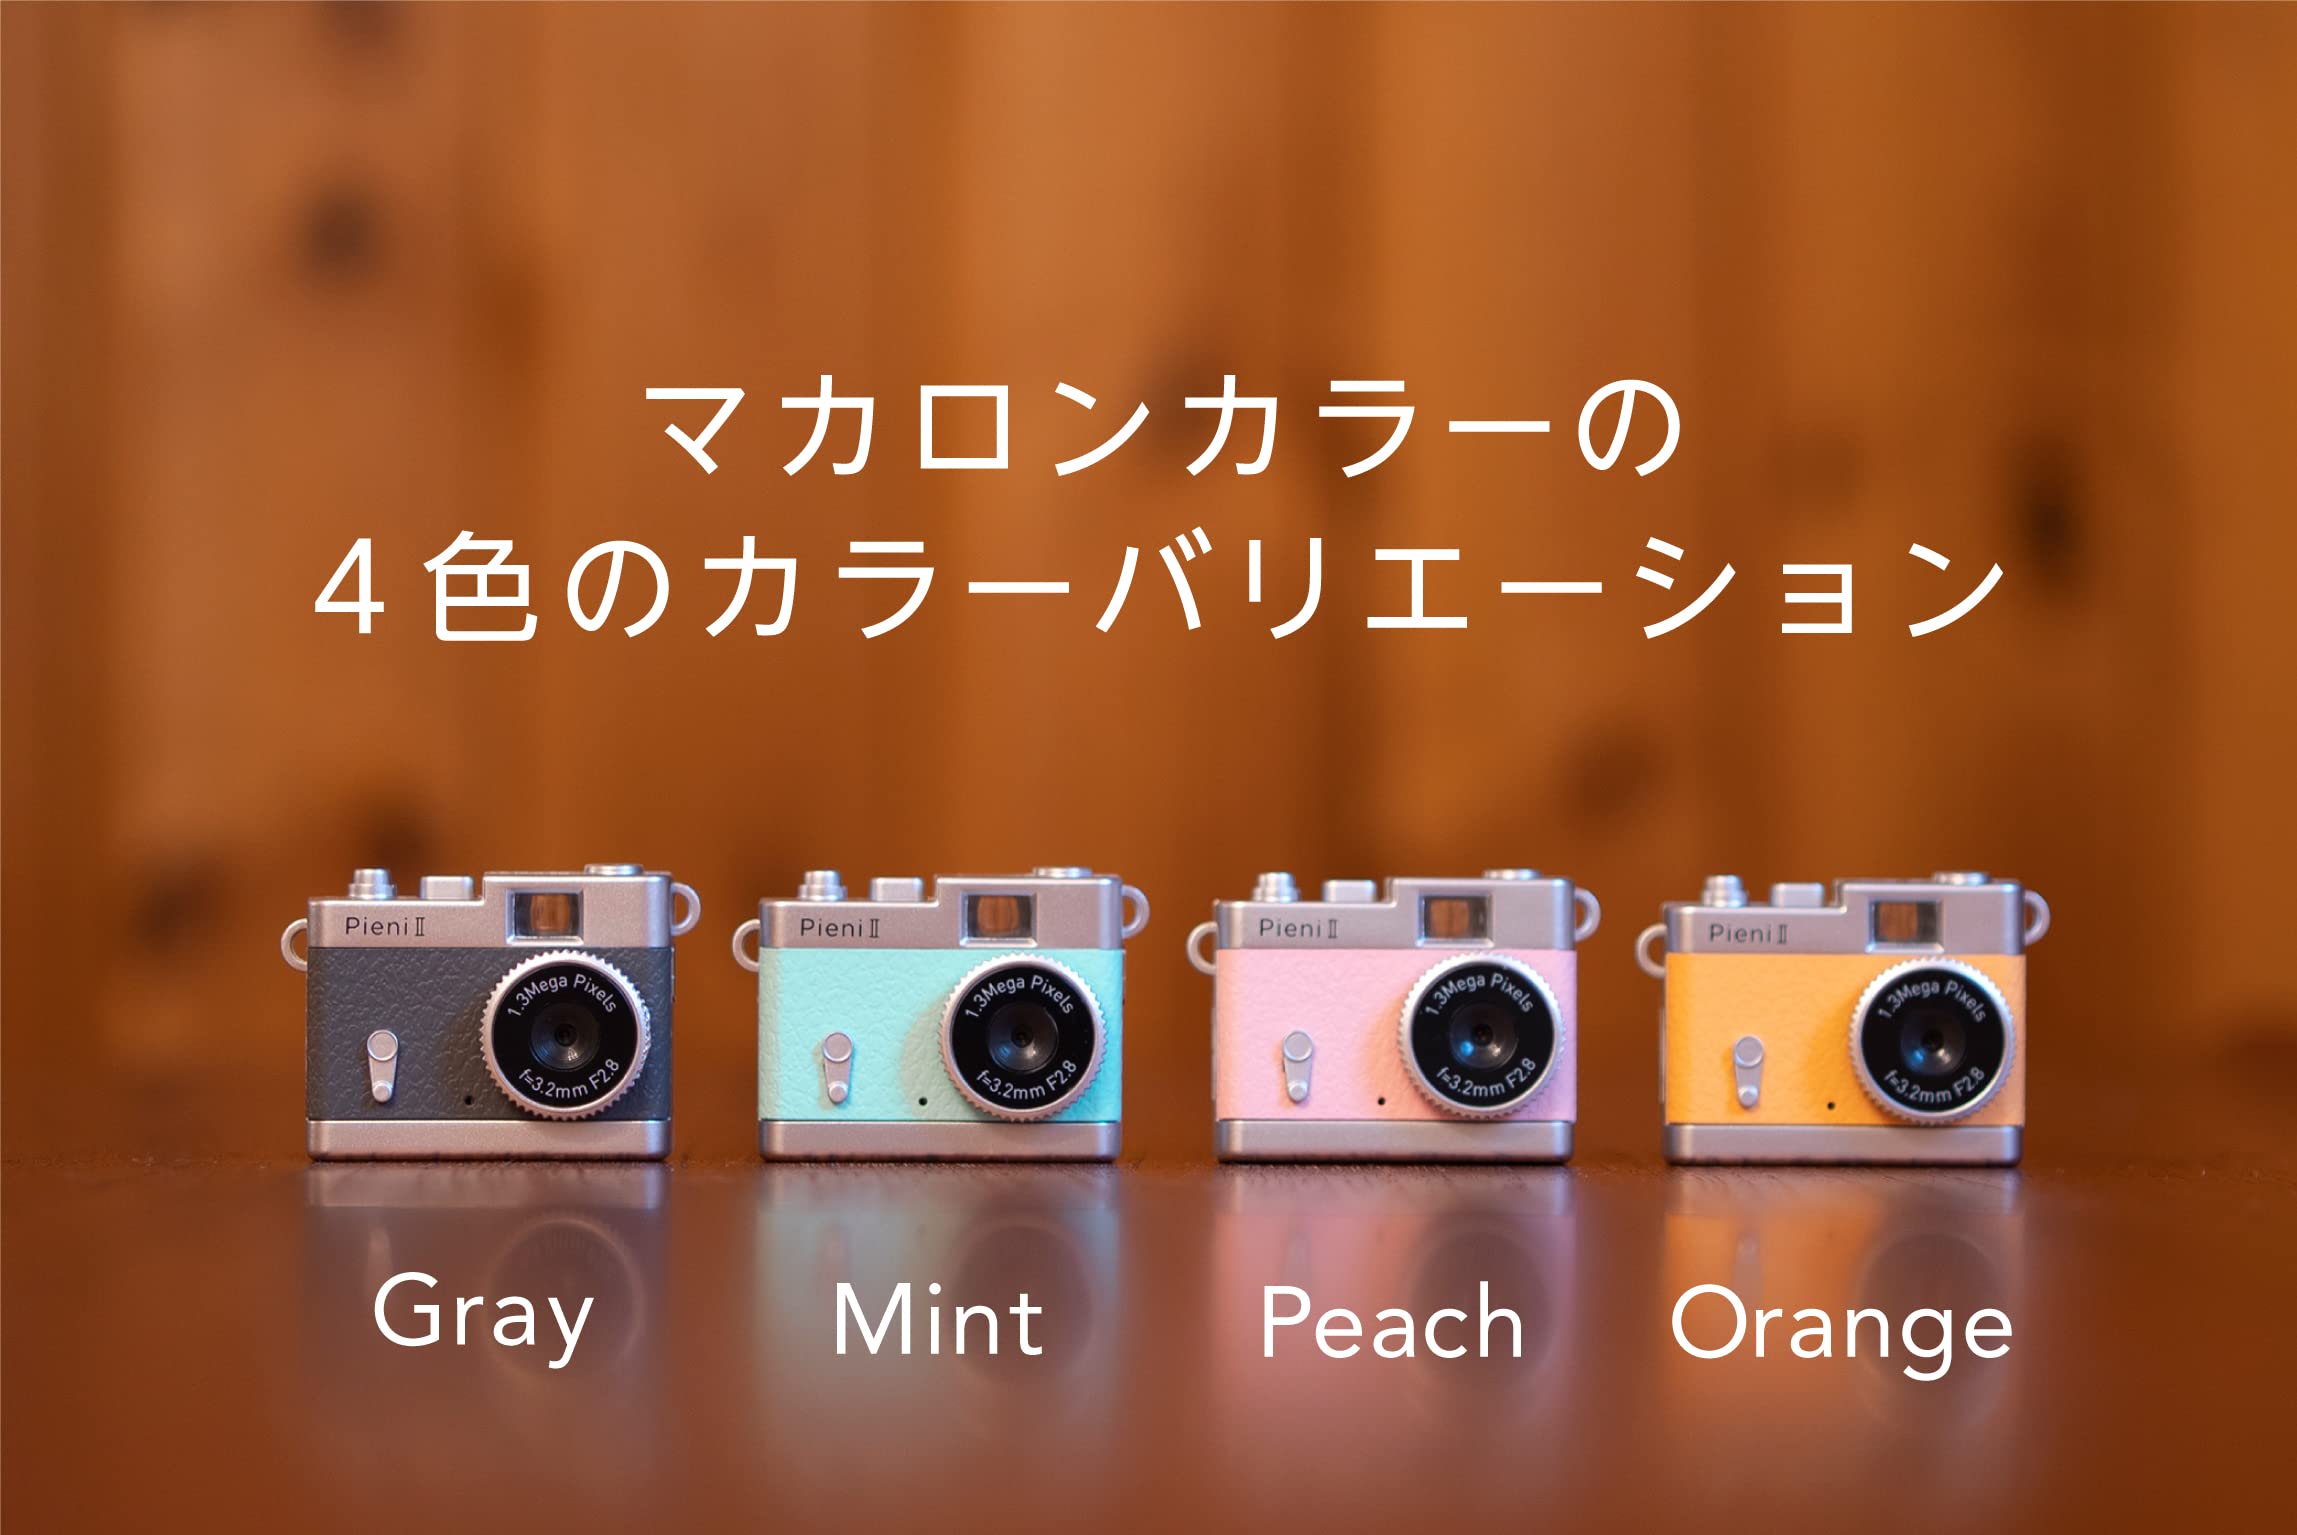 Kenko Pieni II 144312 Digital Toy Camera, Gray Keychain Set, 1.31 Megapixels, Photo and Video Capture, Micro SD Card Slot